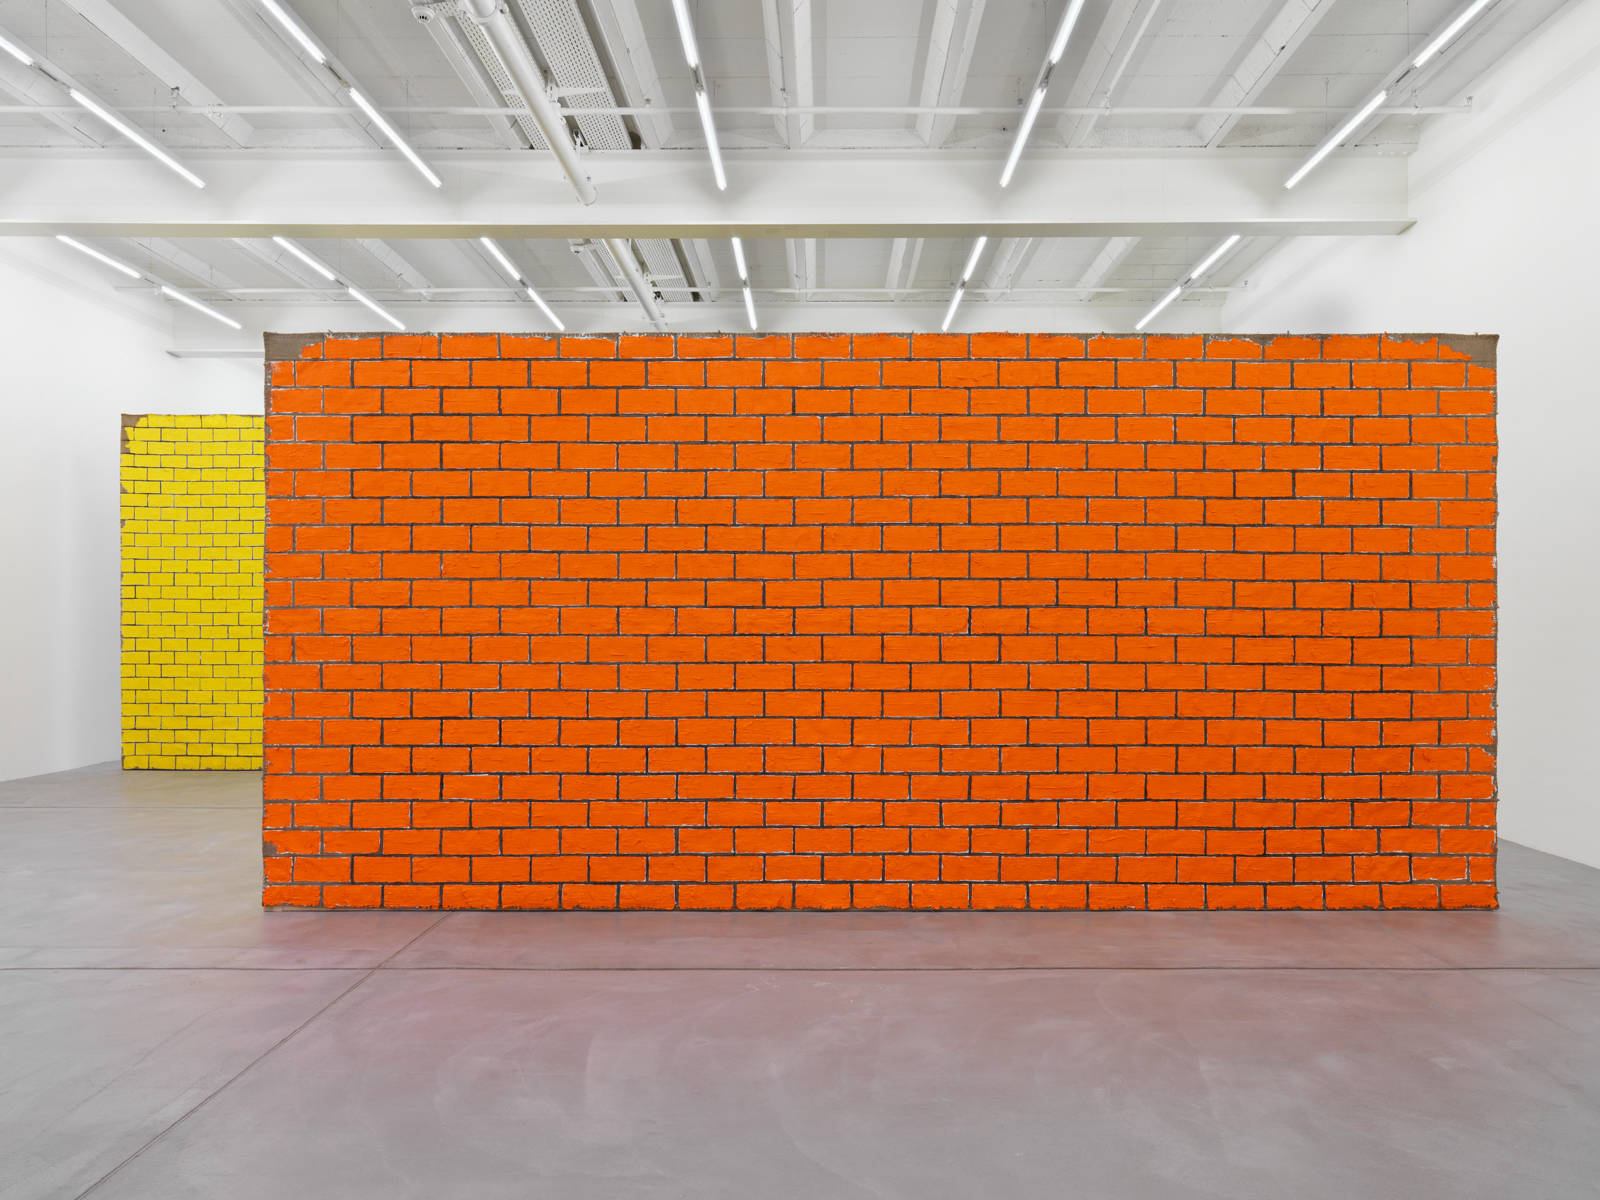 Ugo Rondinone / "walls + windows + doors", exhibition view, Galerie Eva Presenhuber, Zürich / 2015